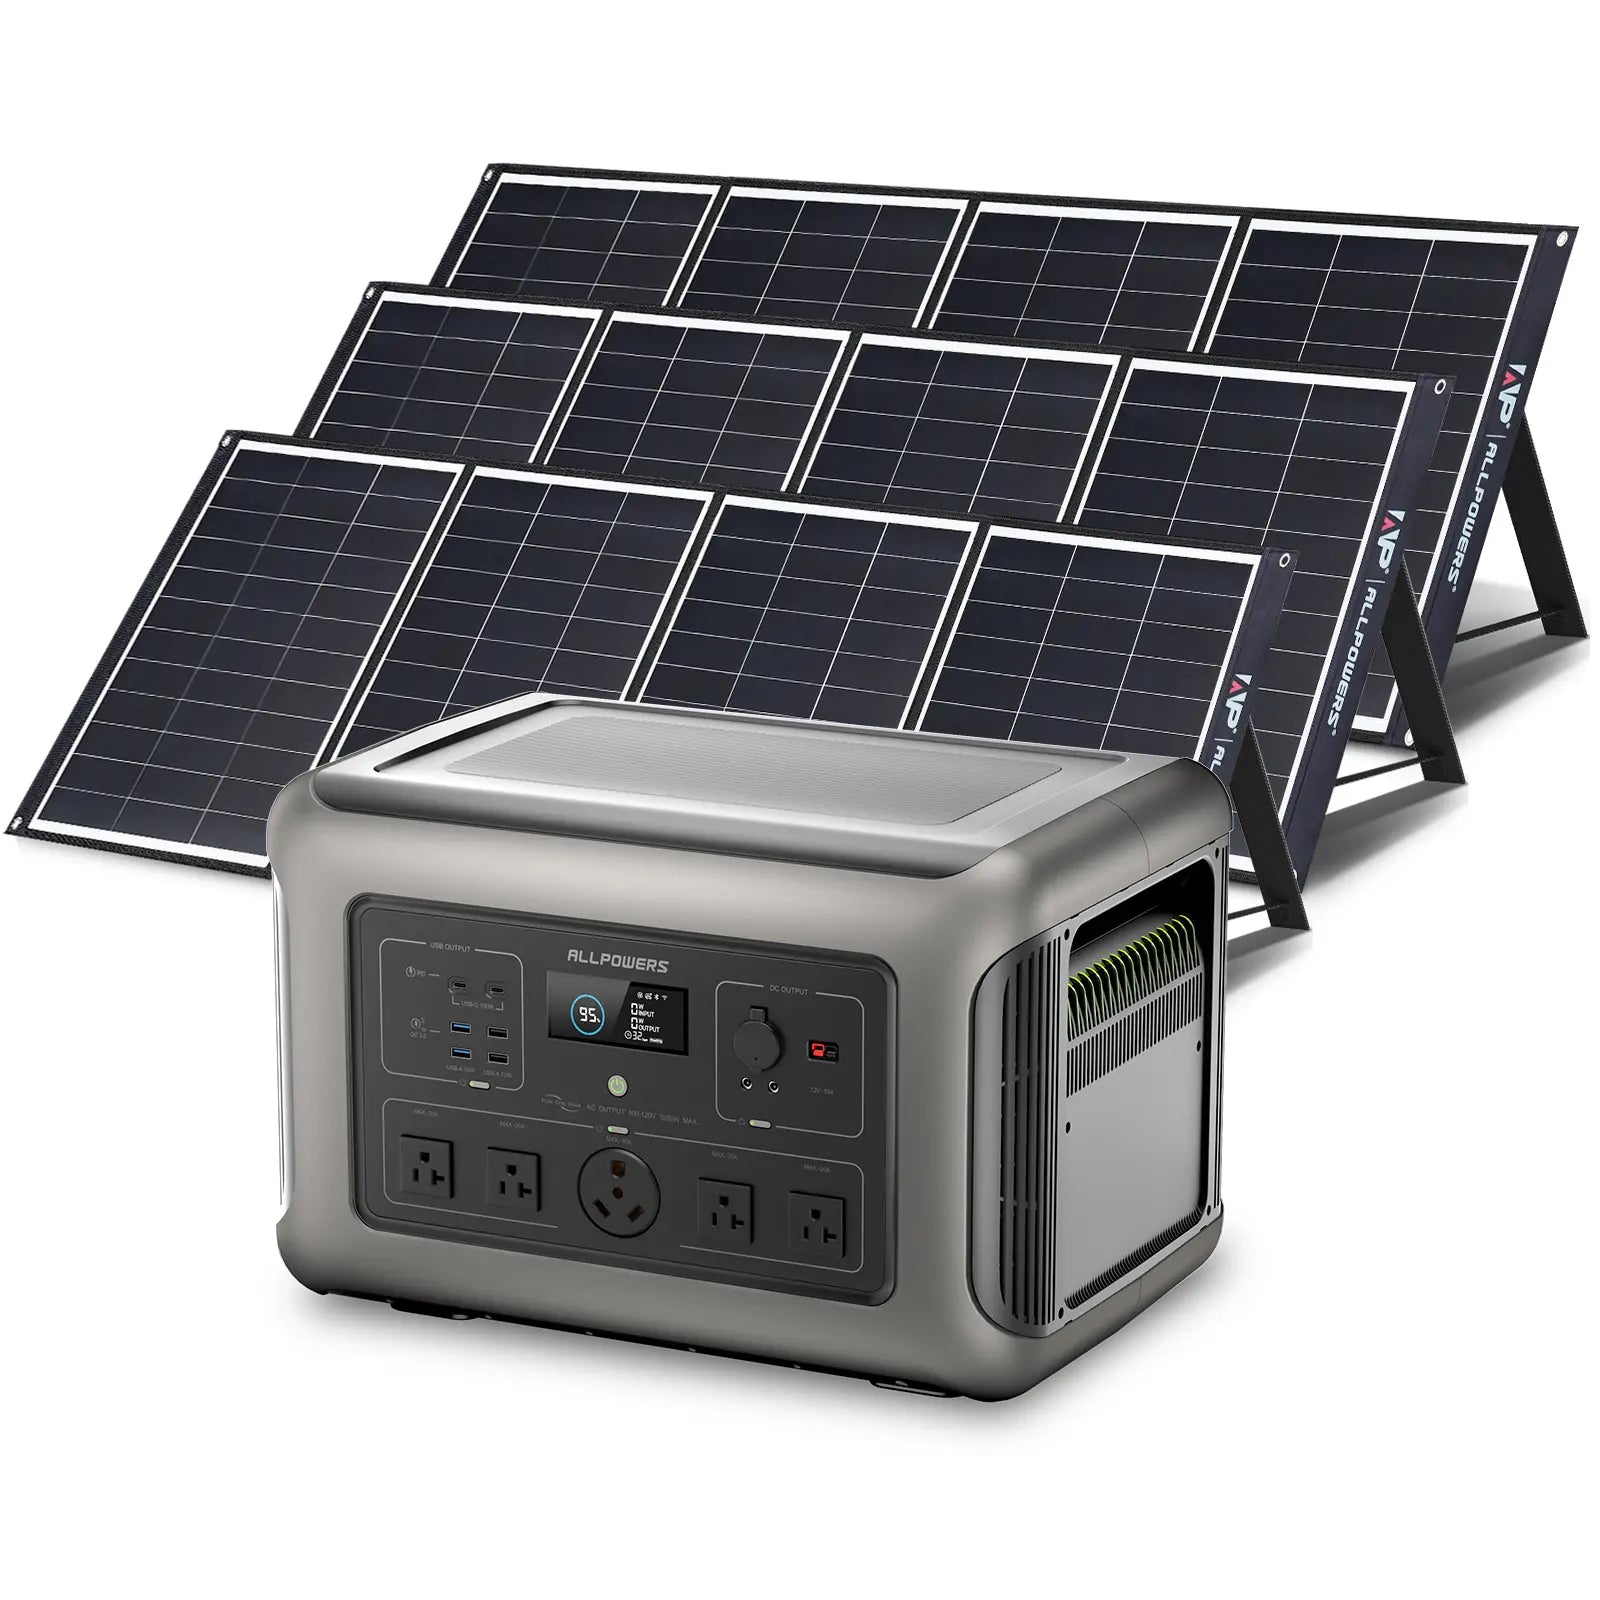 ALLPOWERS Solar Generator Kit 3200W (R3500 + 3 x SP035 200W Solar Panel)